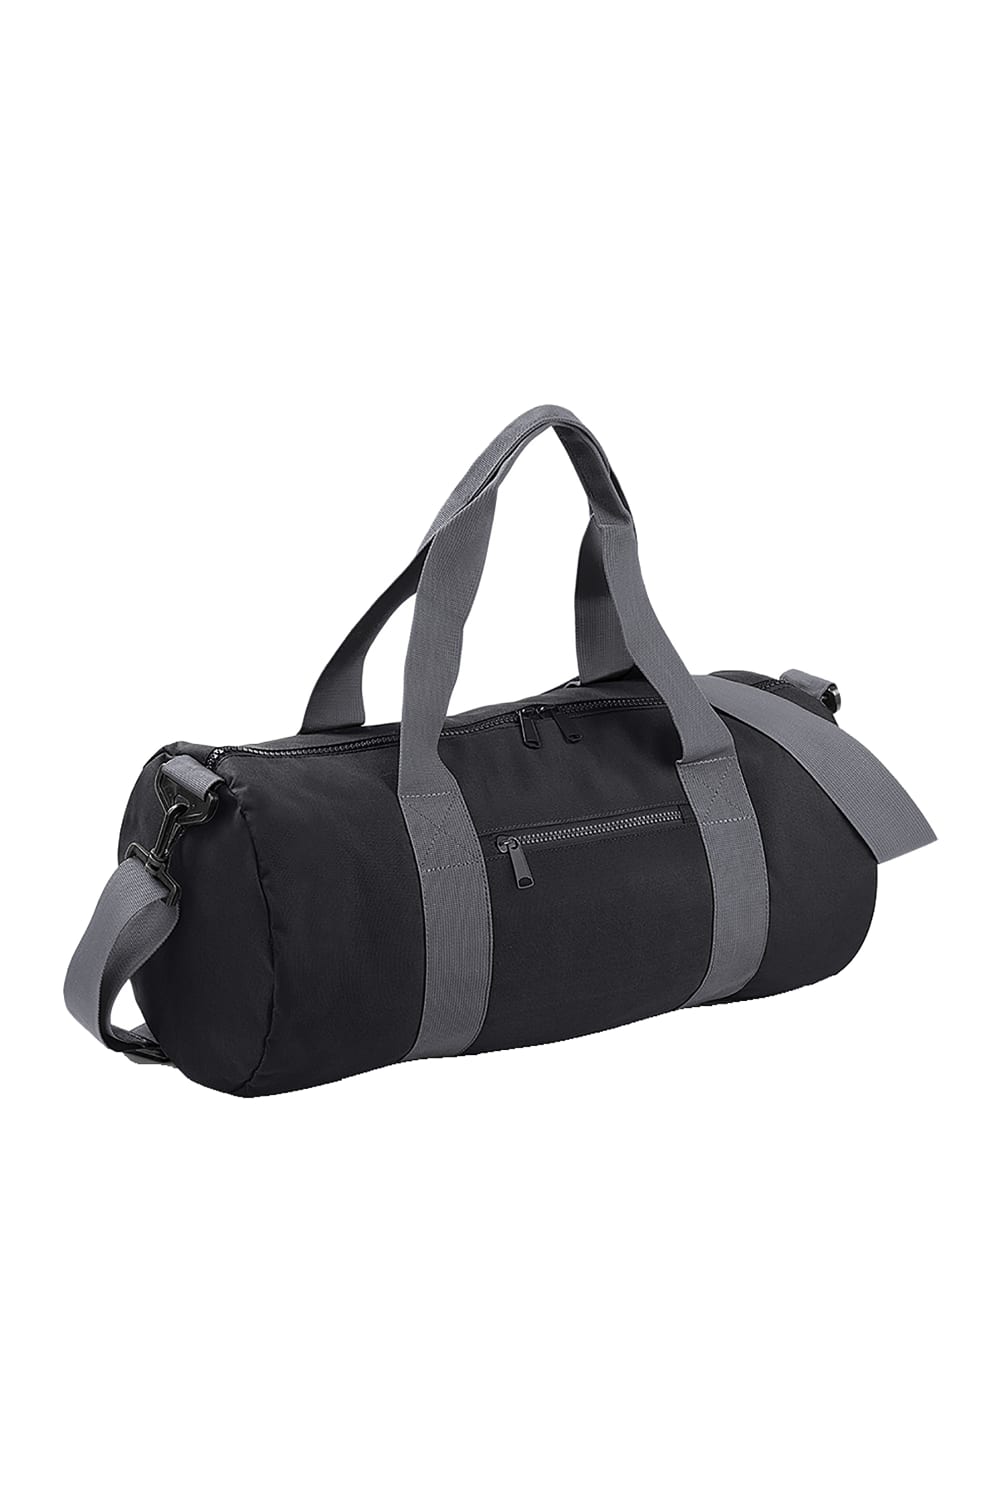 Plain Varsity Barrel/Duffel Bag (20 Liters) - Black/Gray